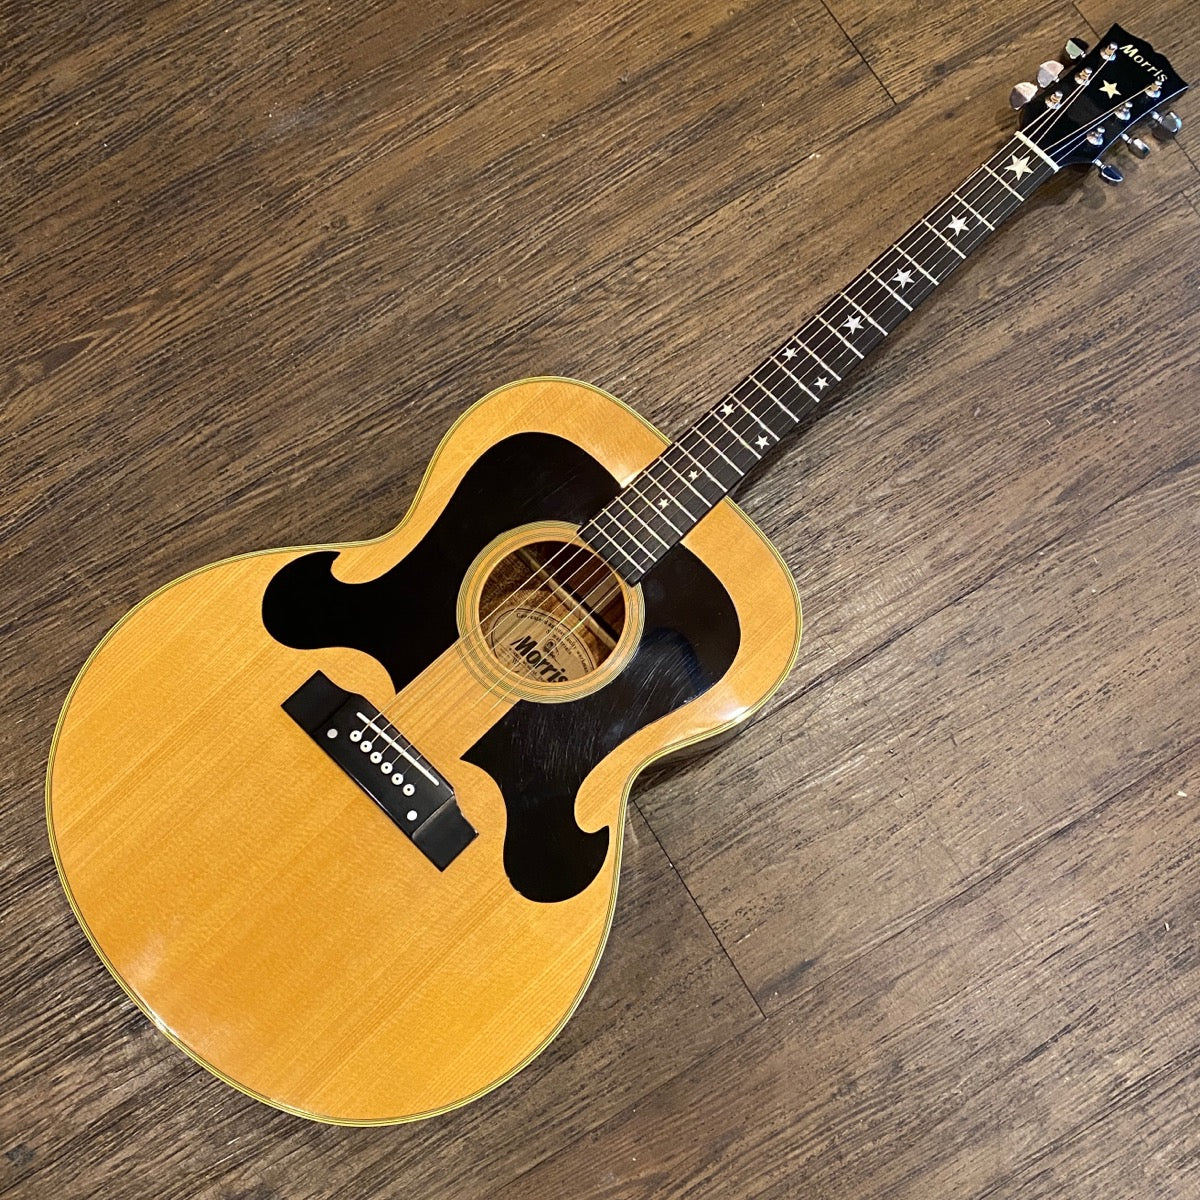 Morris WJ-25 Acoustic Guitar 1970s made in Japan -GrunSound-w964-